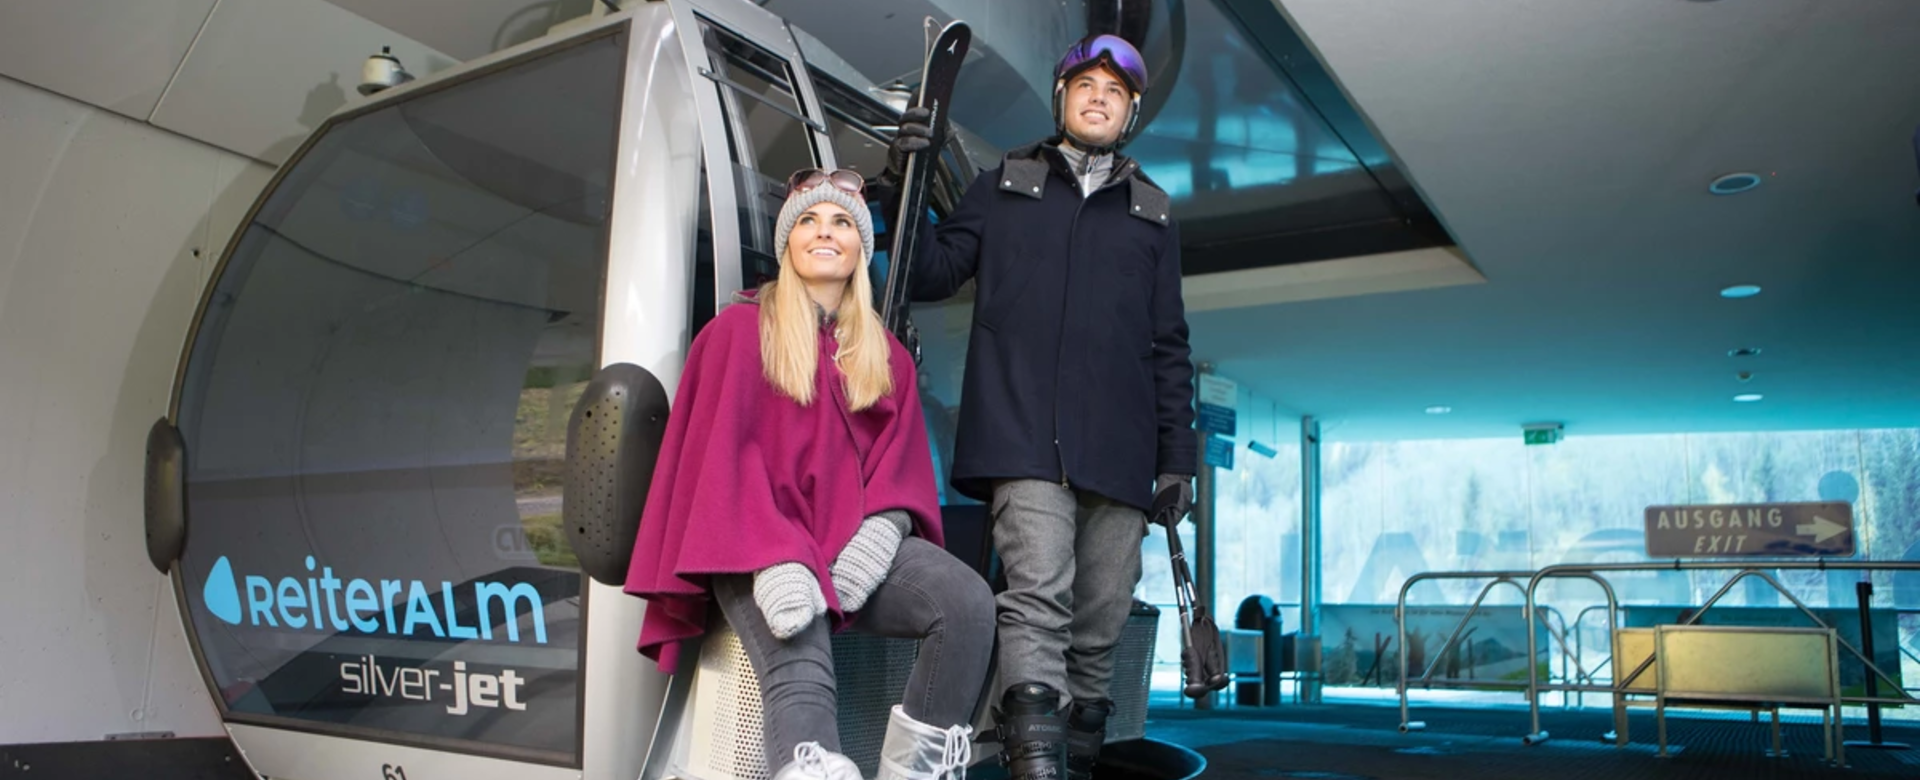 A female and a male model pose in front of a Reiteralm gondola in new winter fashion. | © Reiteralm Bergbahnen